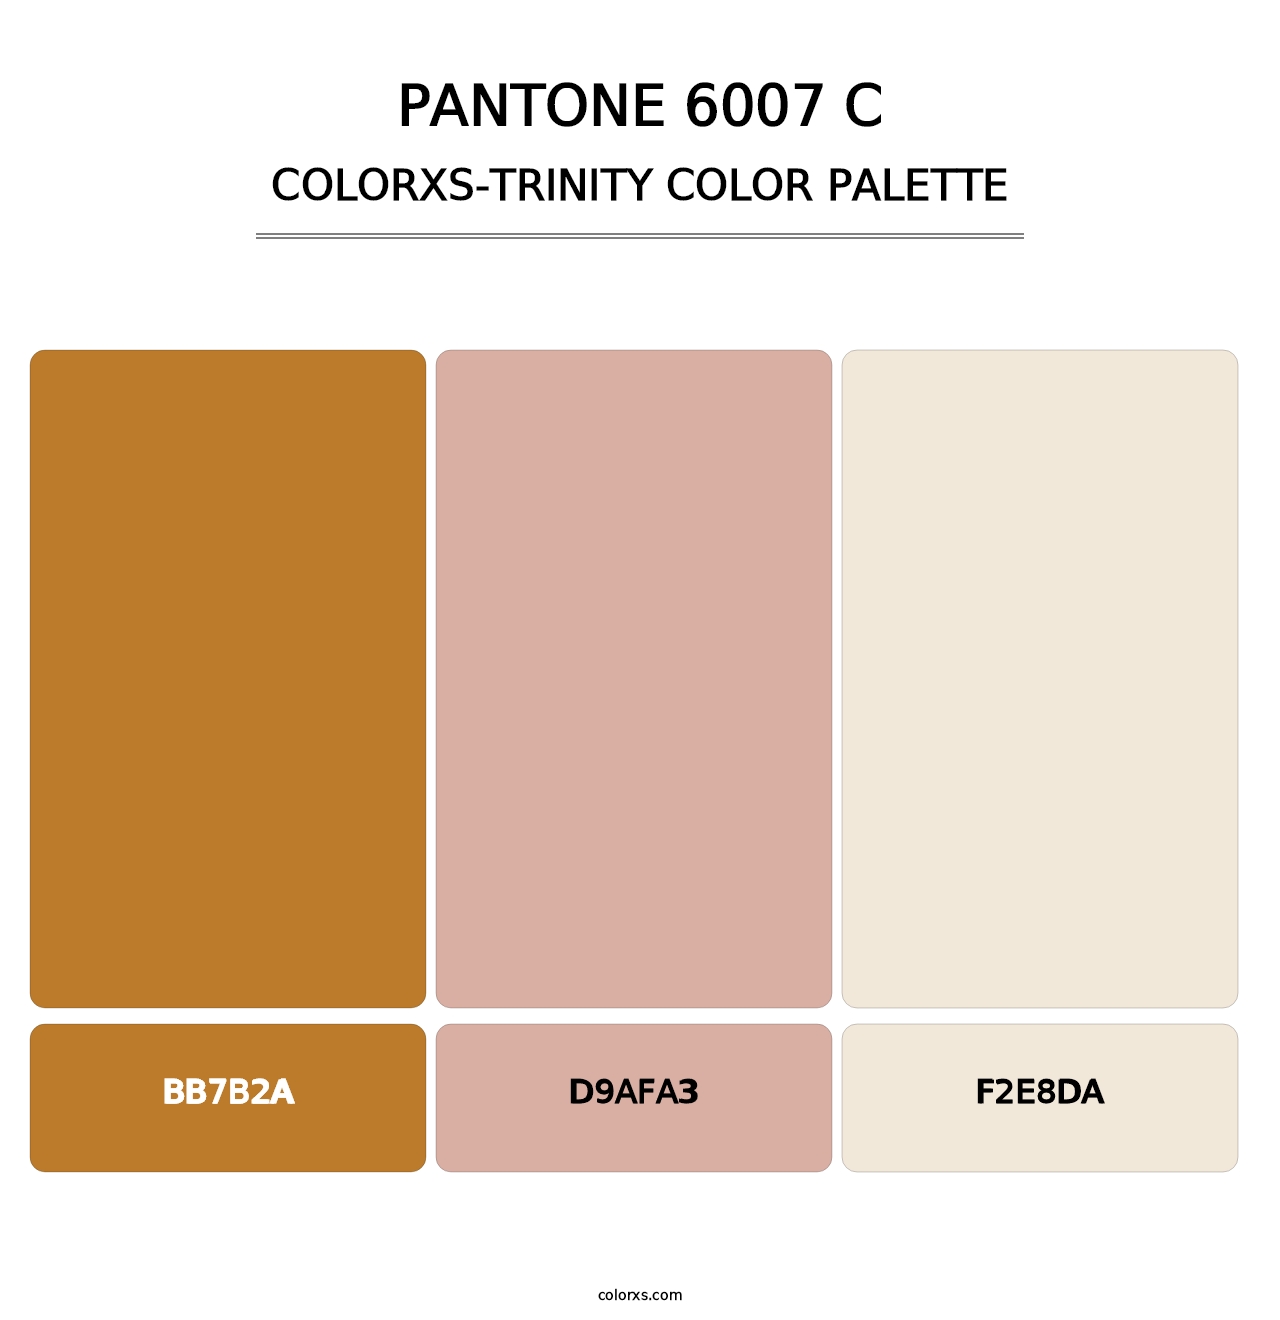 PANTONE 6007 C - Colorxs Trinity Palette